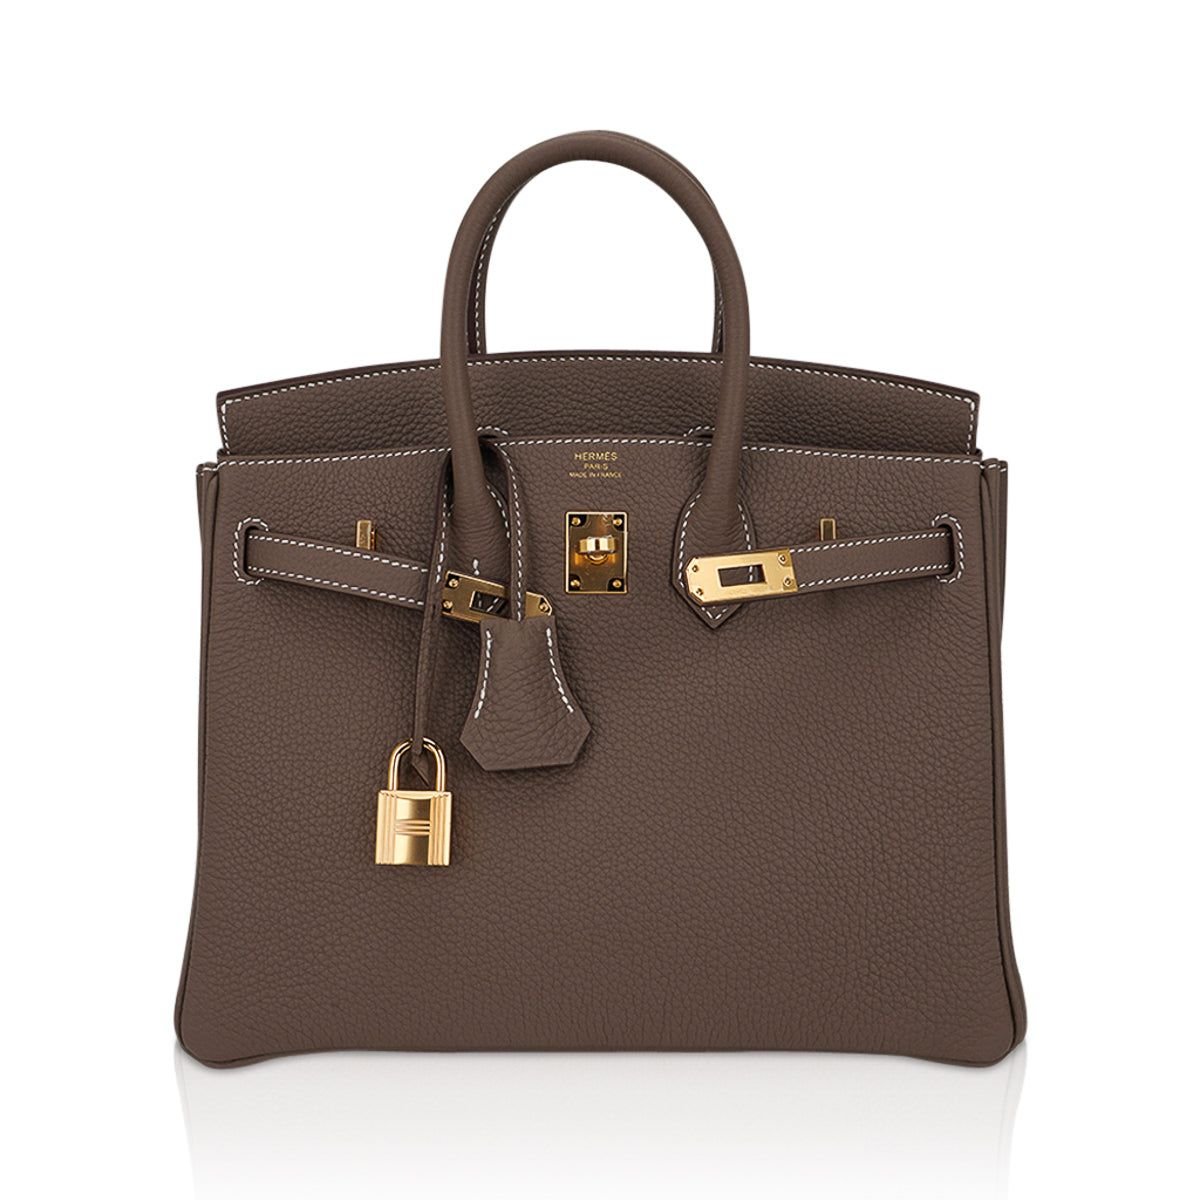 Hermes Birkin 25 Bag in Etoupe Togo Leather with Gold Hardware.jpeg